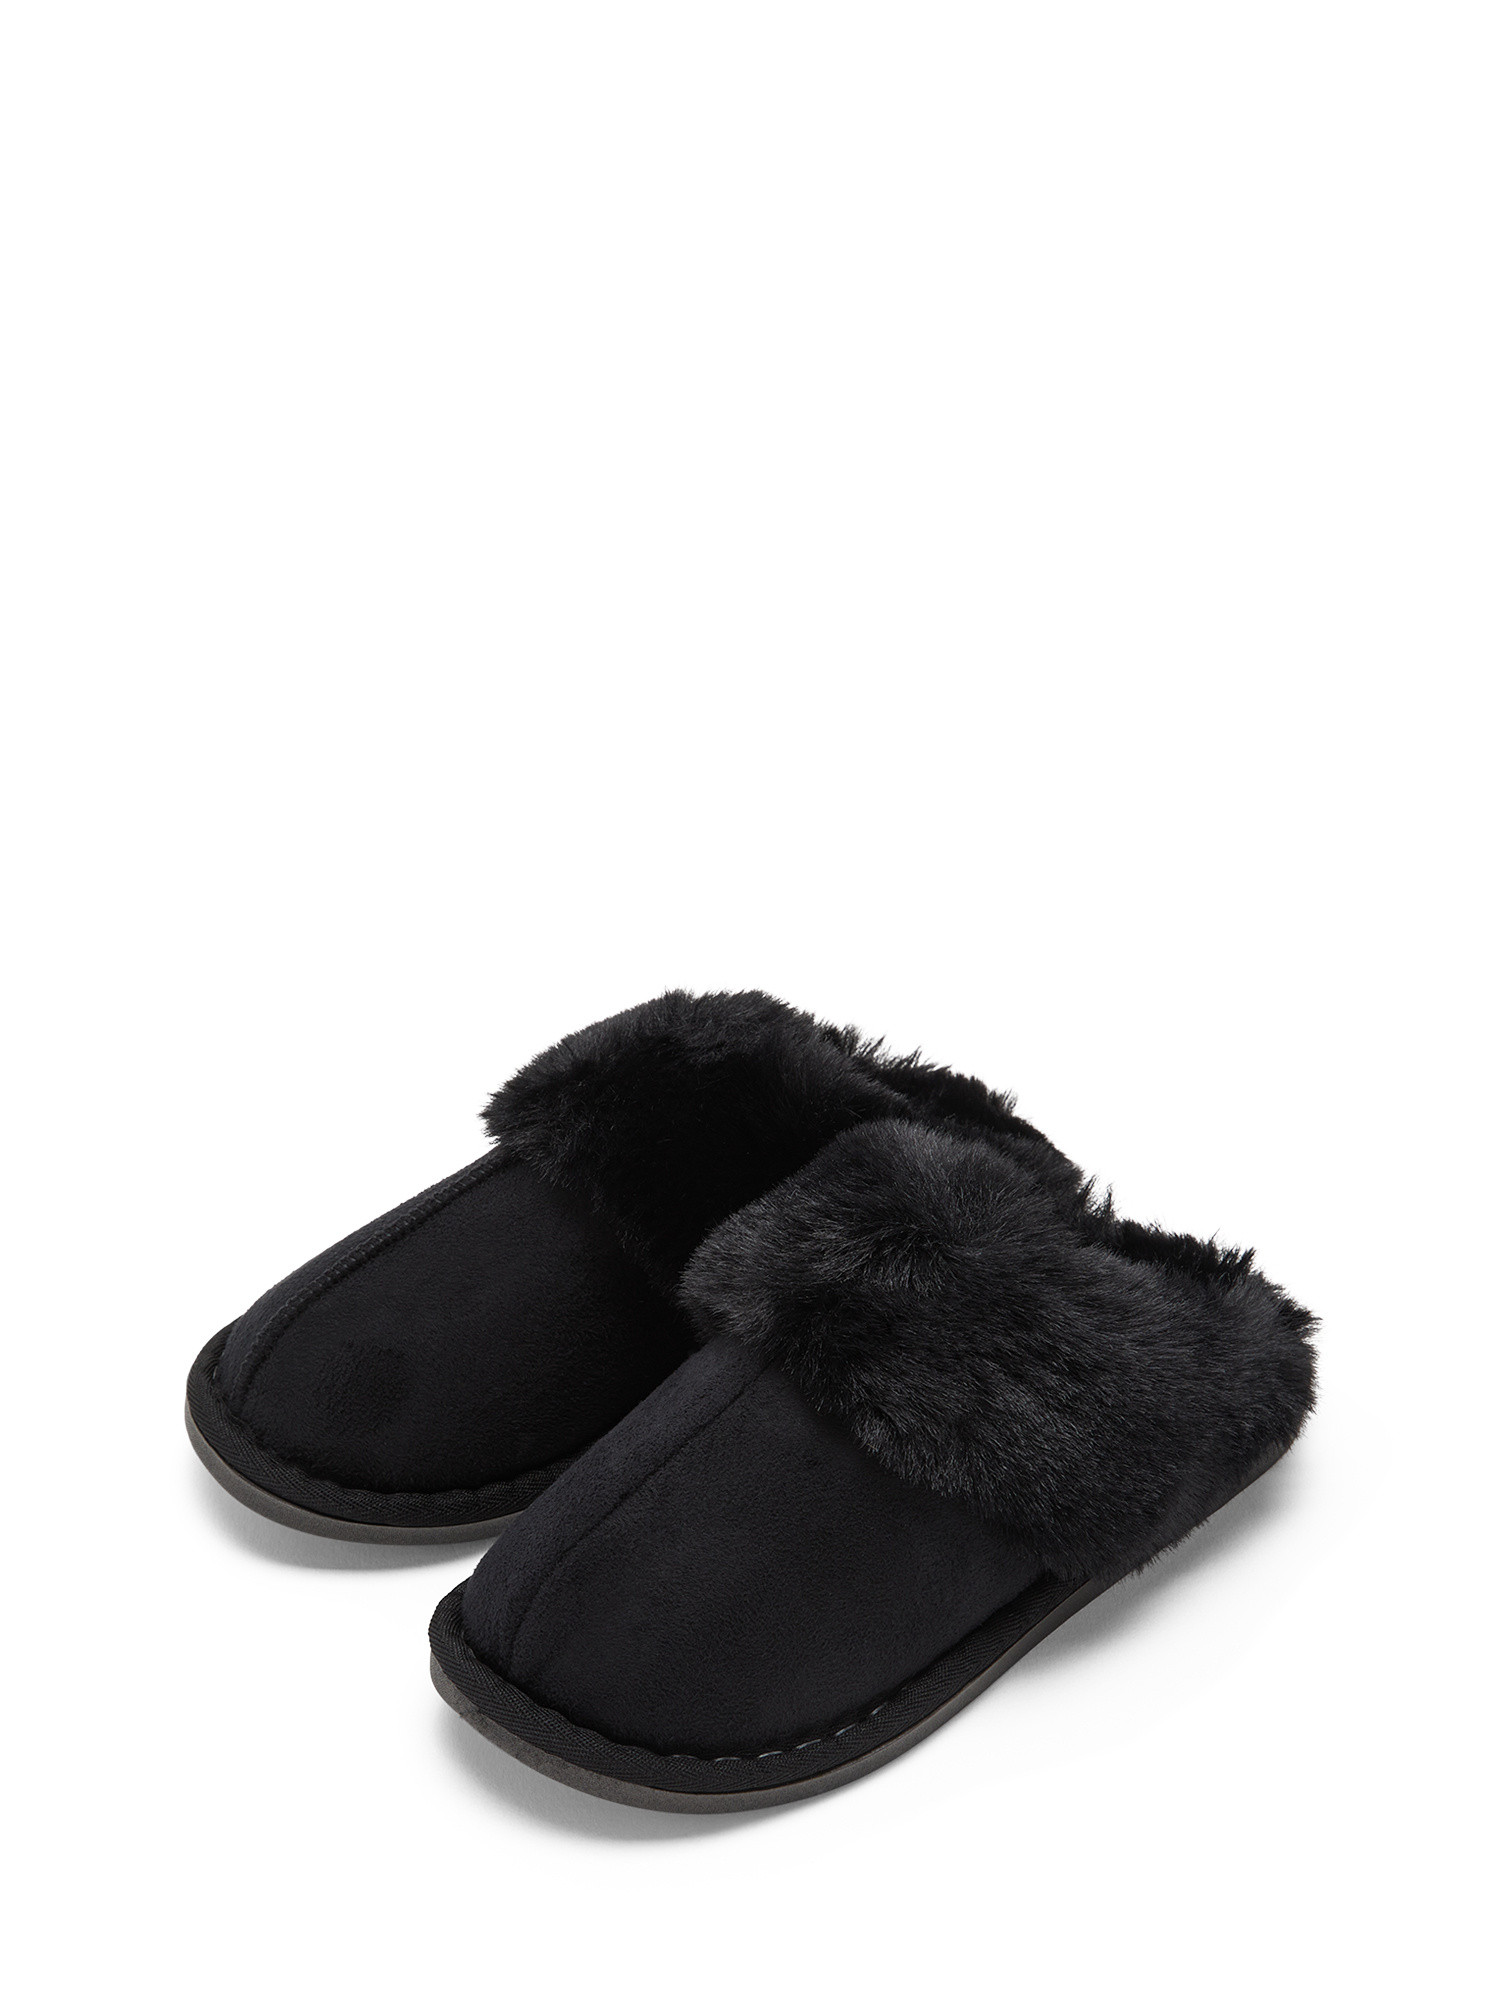 Fluffy slippers, Black, large image number 1